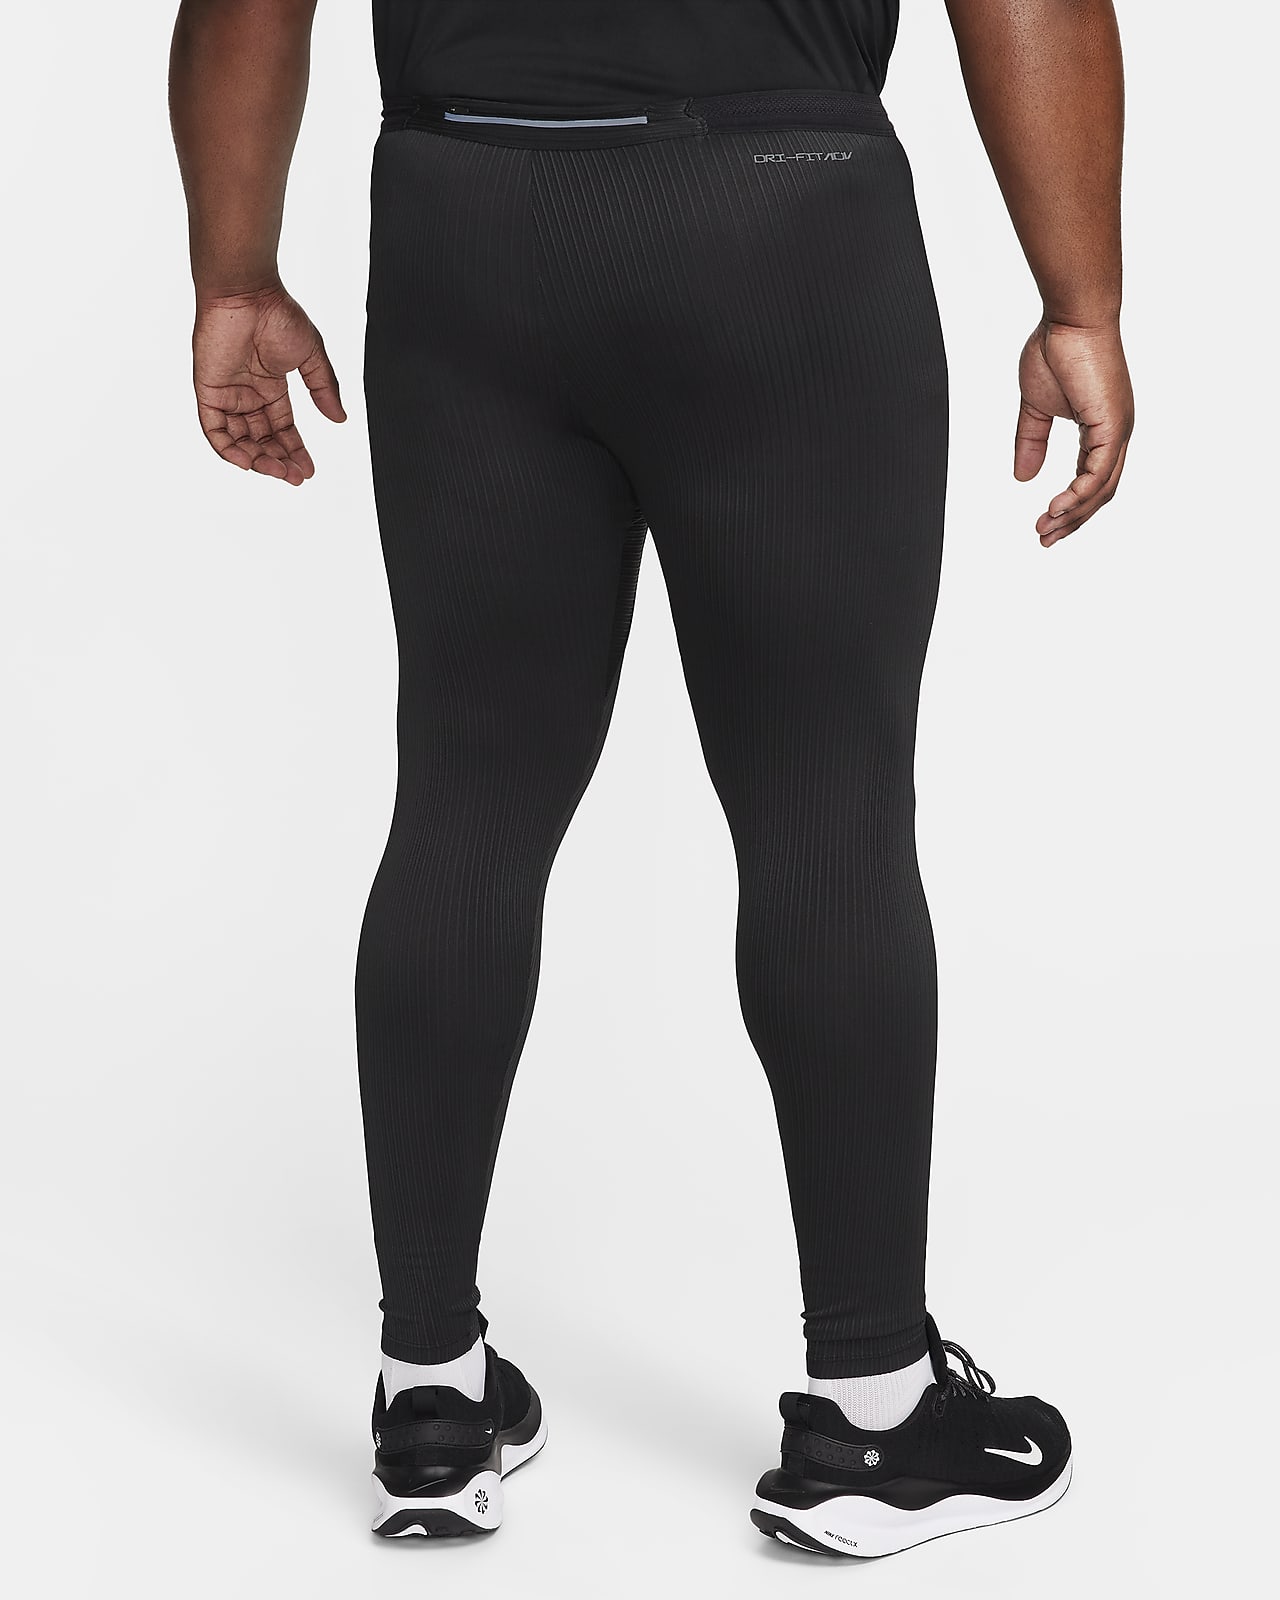 Nike Dri-FIT ADV AeroSwift Racer Running Pants Size XL Black